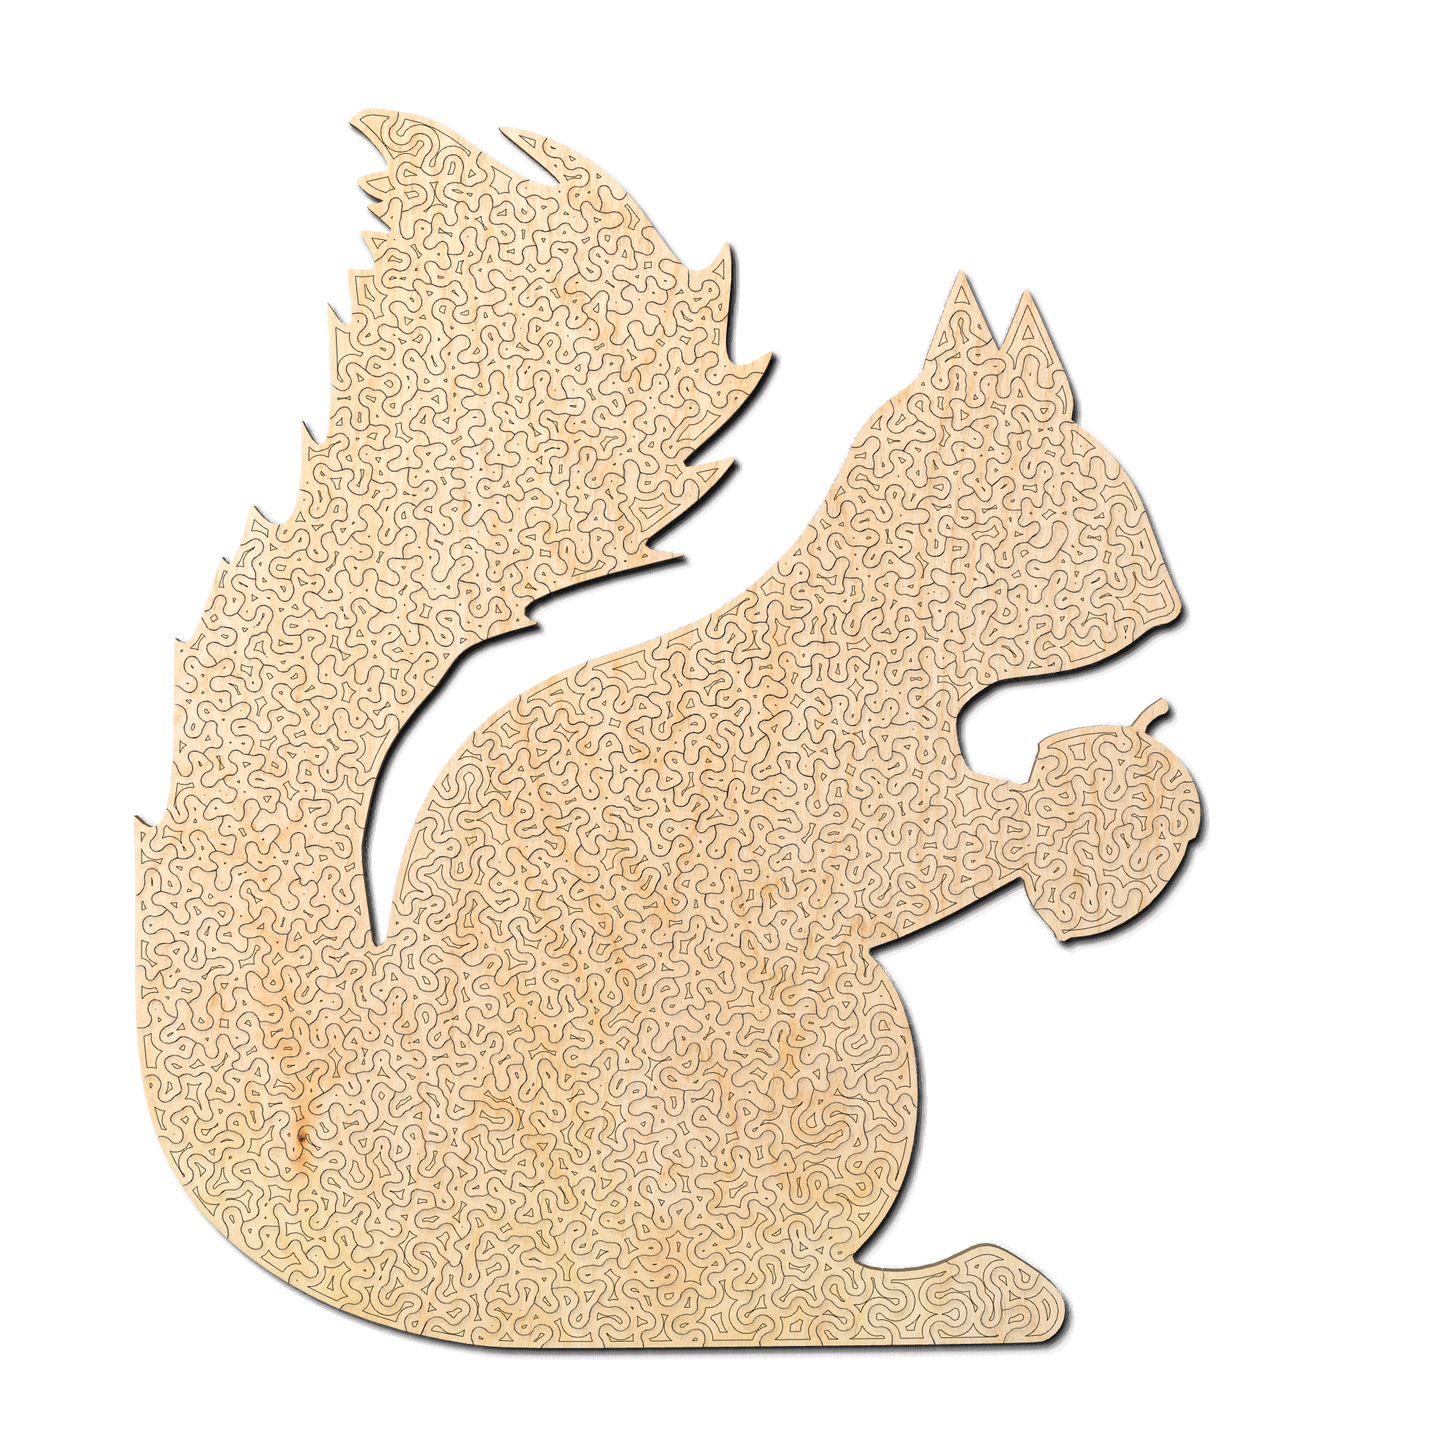 squirrel | Wooden Puzzle | Chaos series - 301 pieces